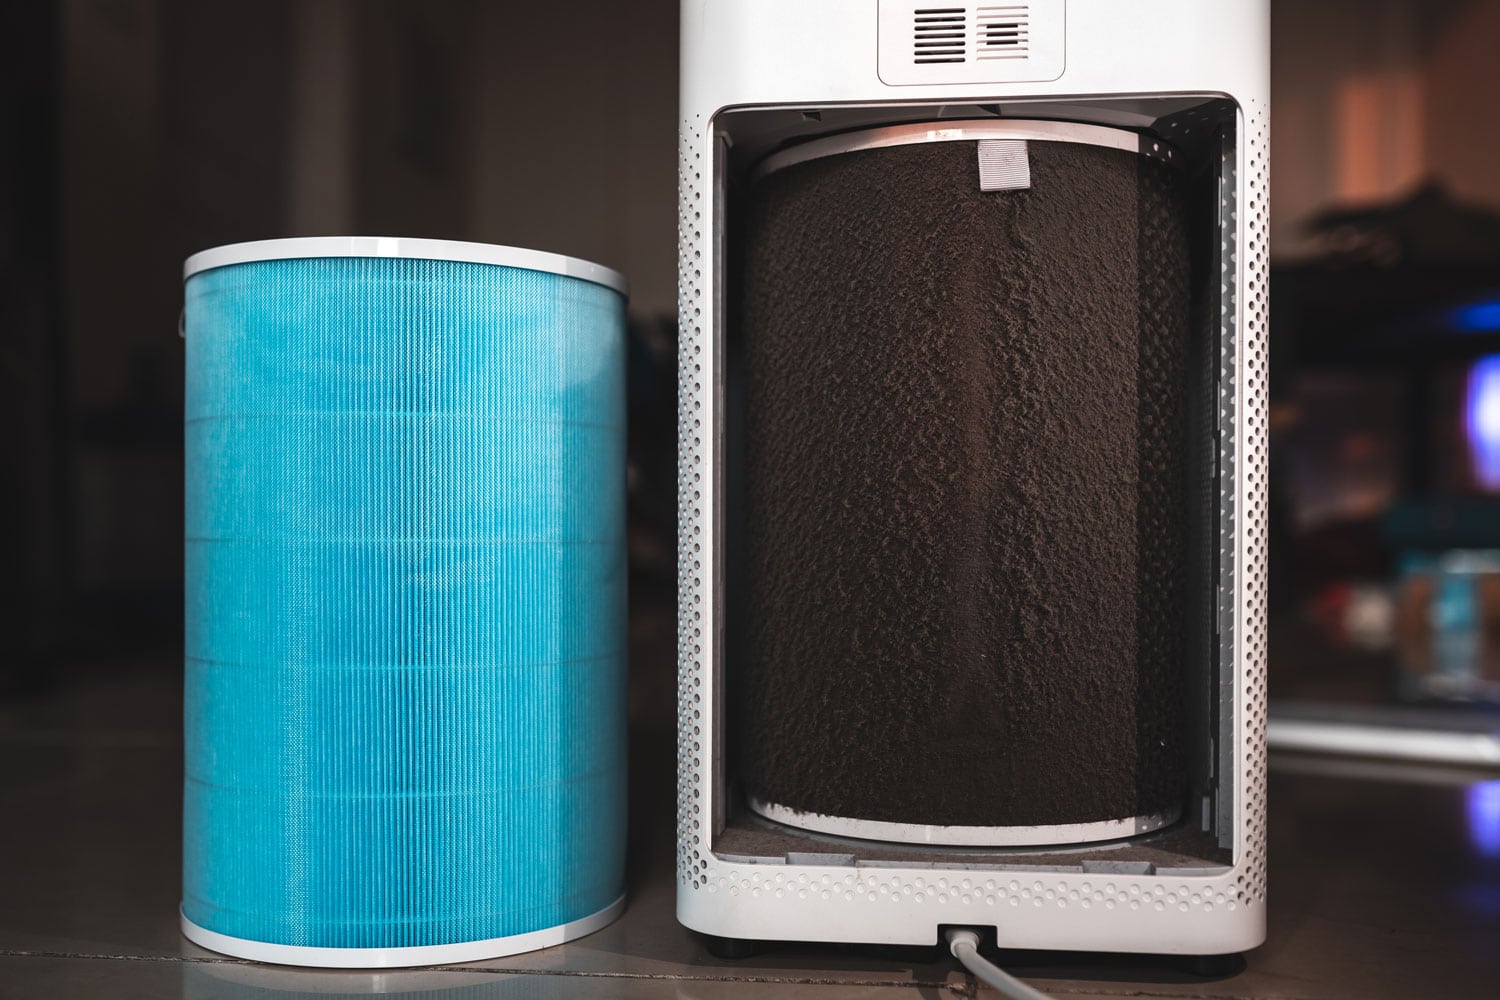 Blue HEPA air filter for an air purifier